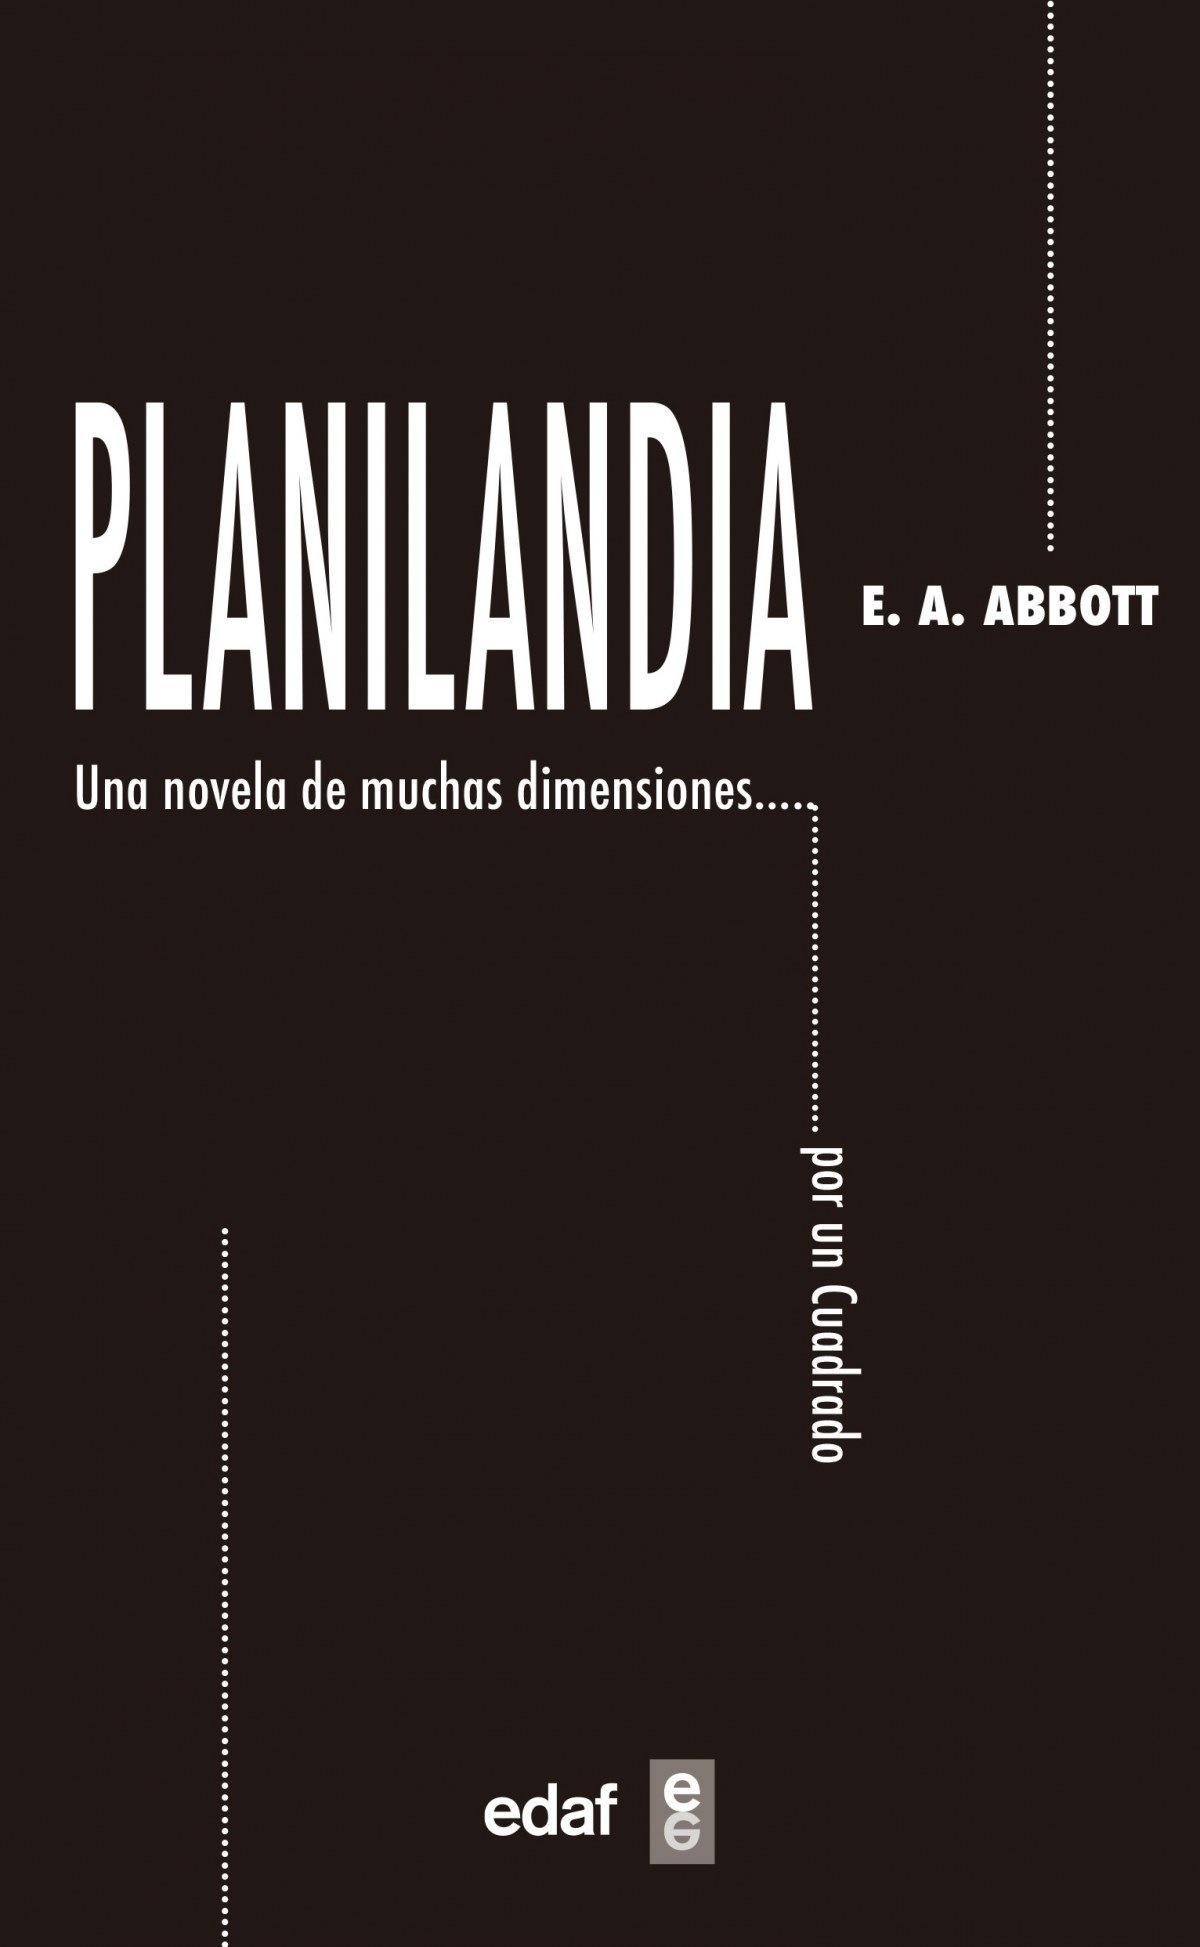 PLANILANDIA Una novela de muchas dimensiones... - Edwin A. Abbot